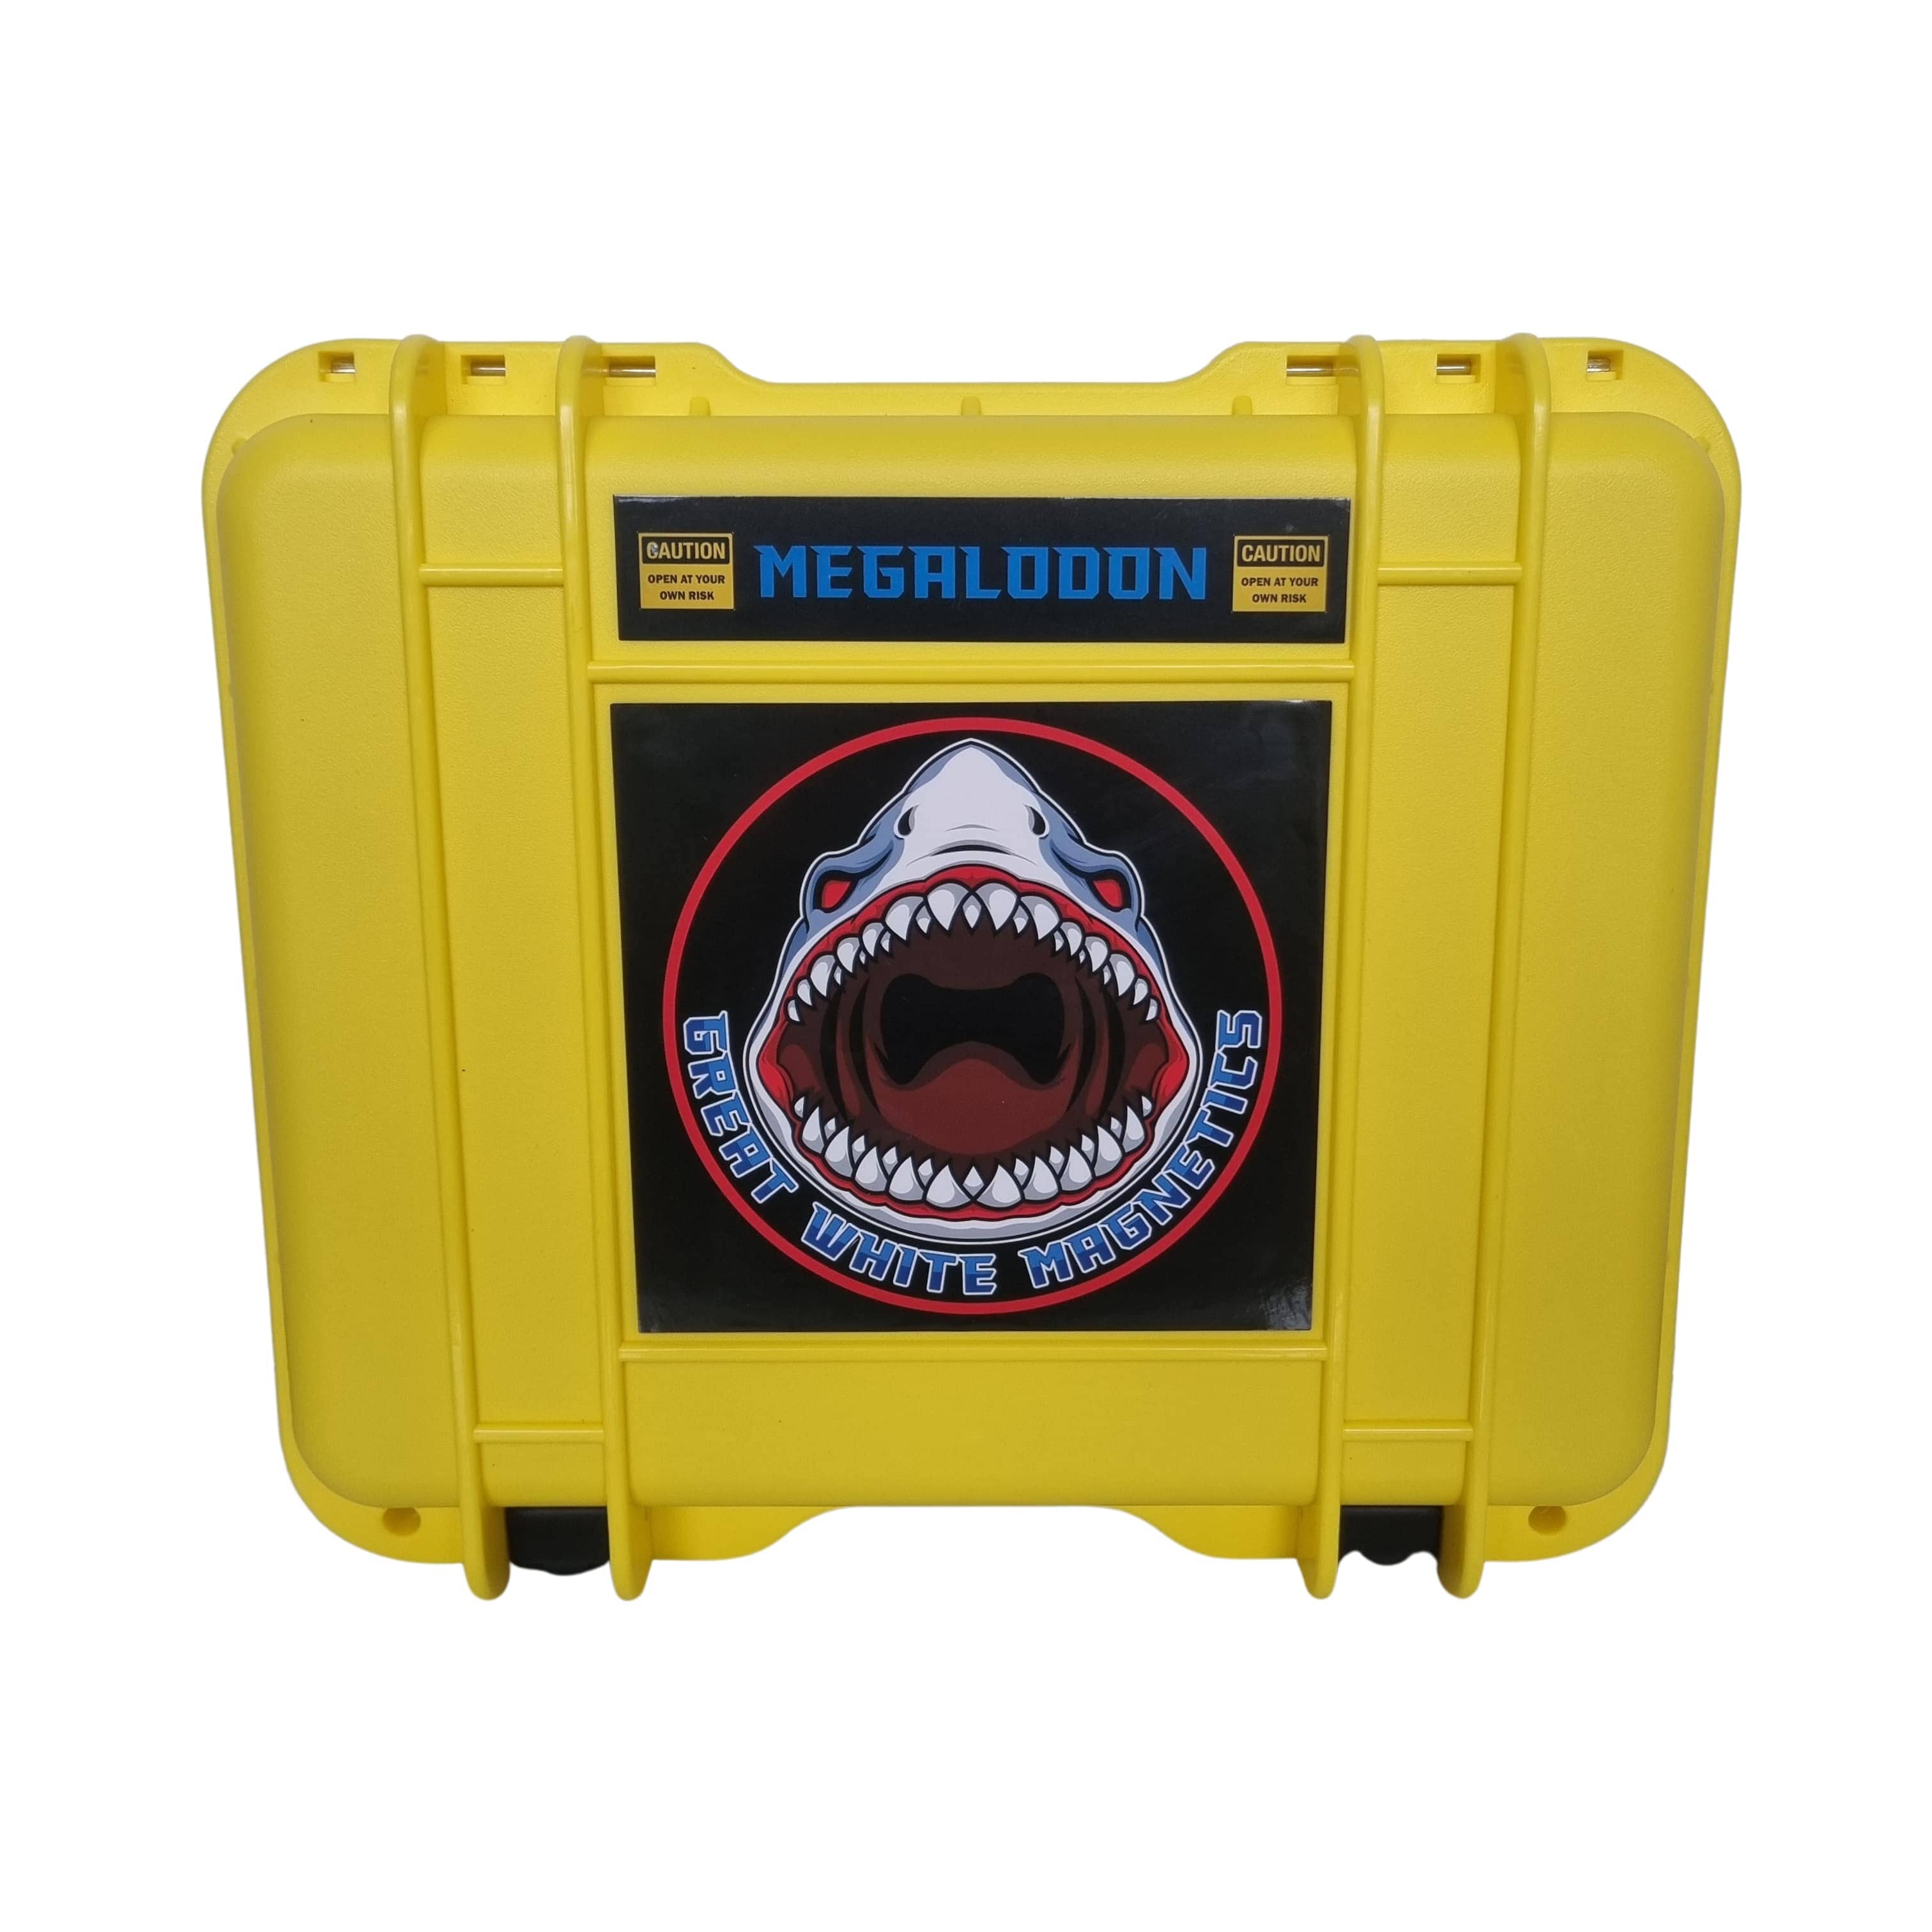 Megalodon - 1 Ton Expert Magnet Fishing Kit Carry Case